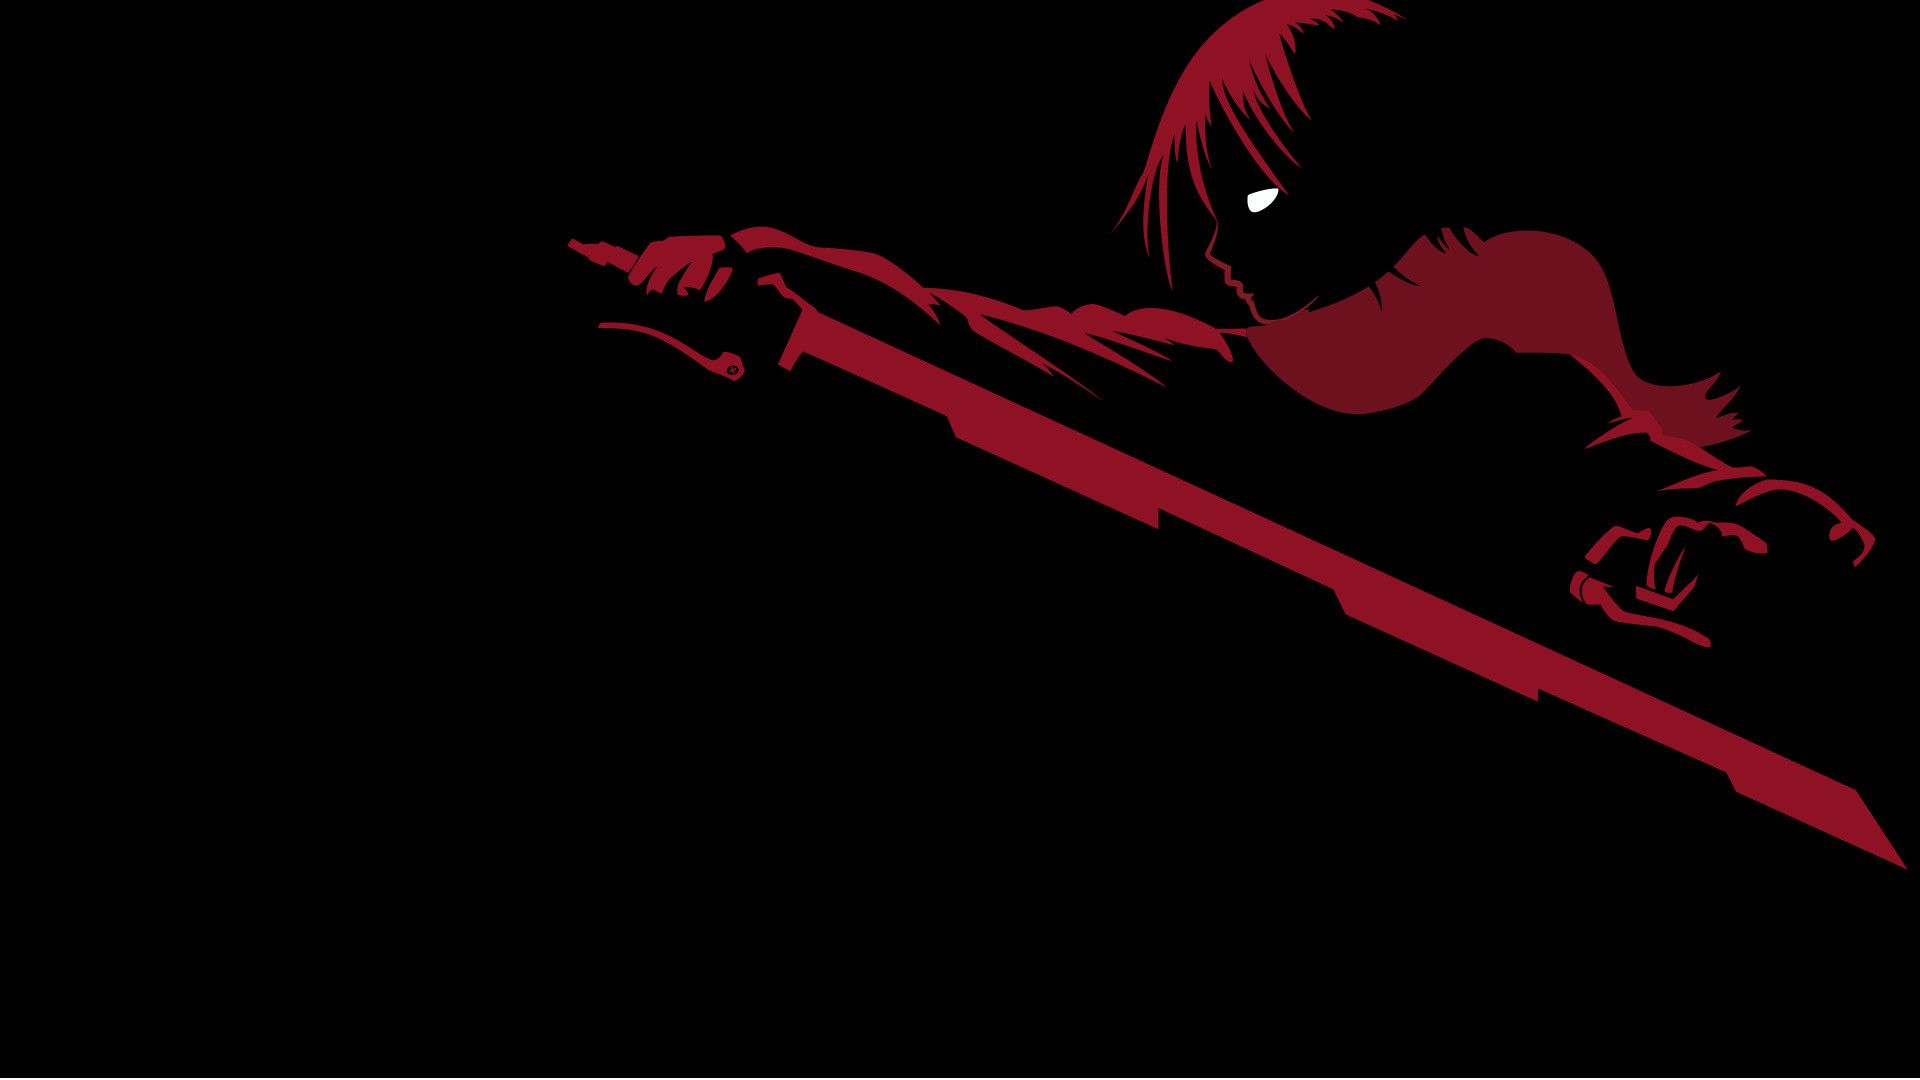 Dark Red Anime Boys Wallpapers